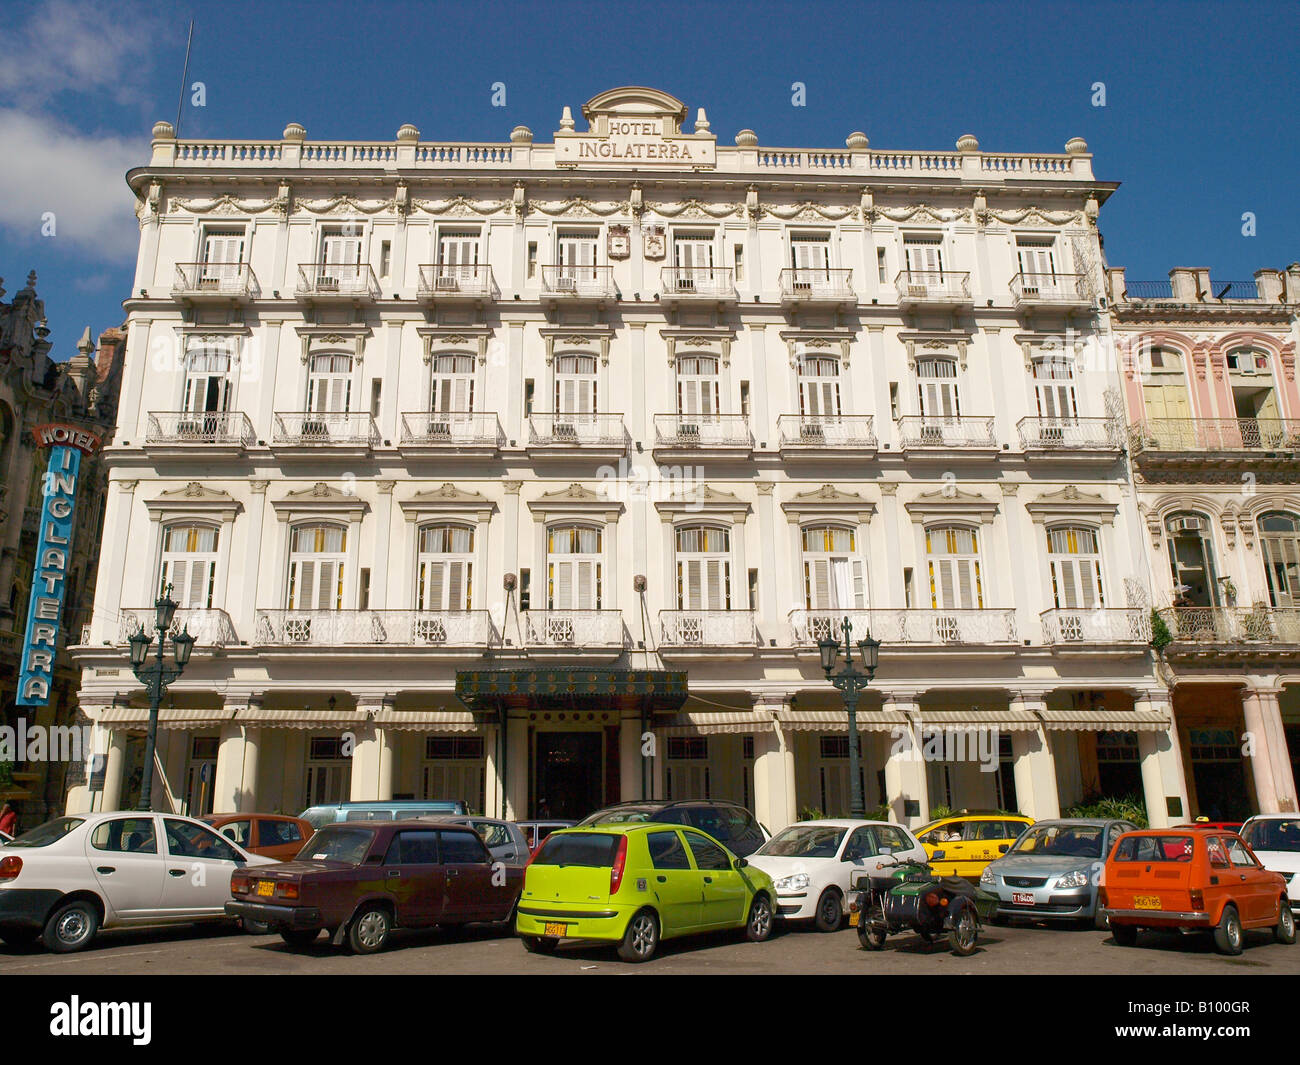 Hotel Inglaterra Havana Cuba Stock Photo